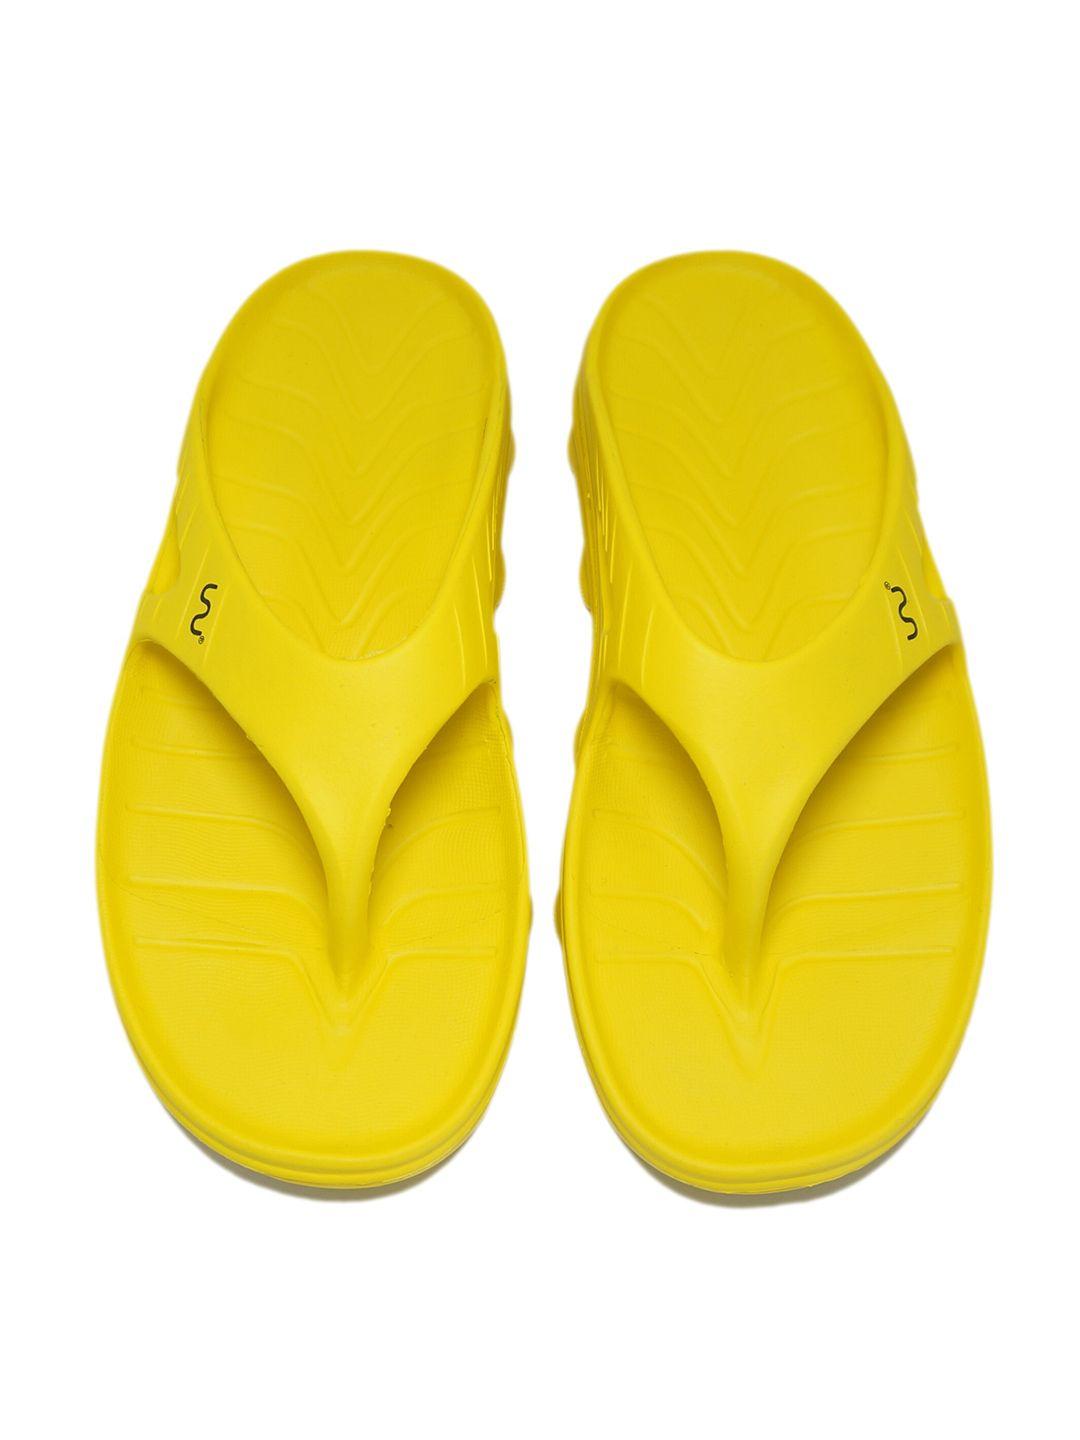 doubleu-men-yellow-rubber-thong-flip-flops